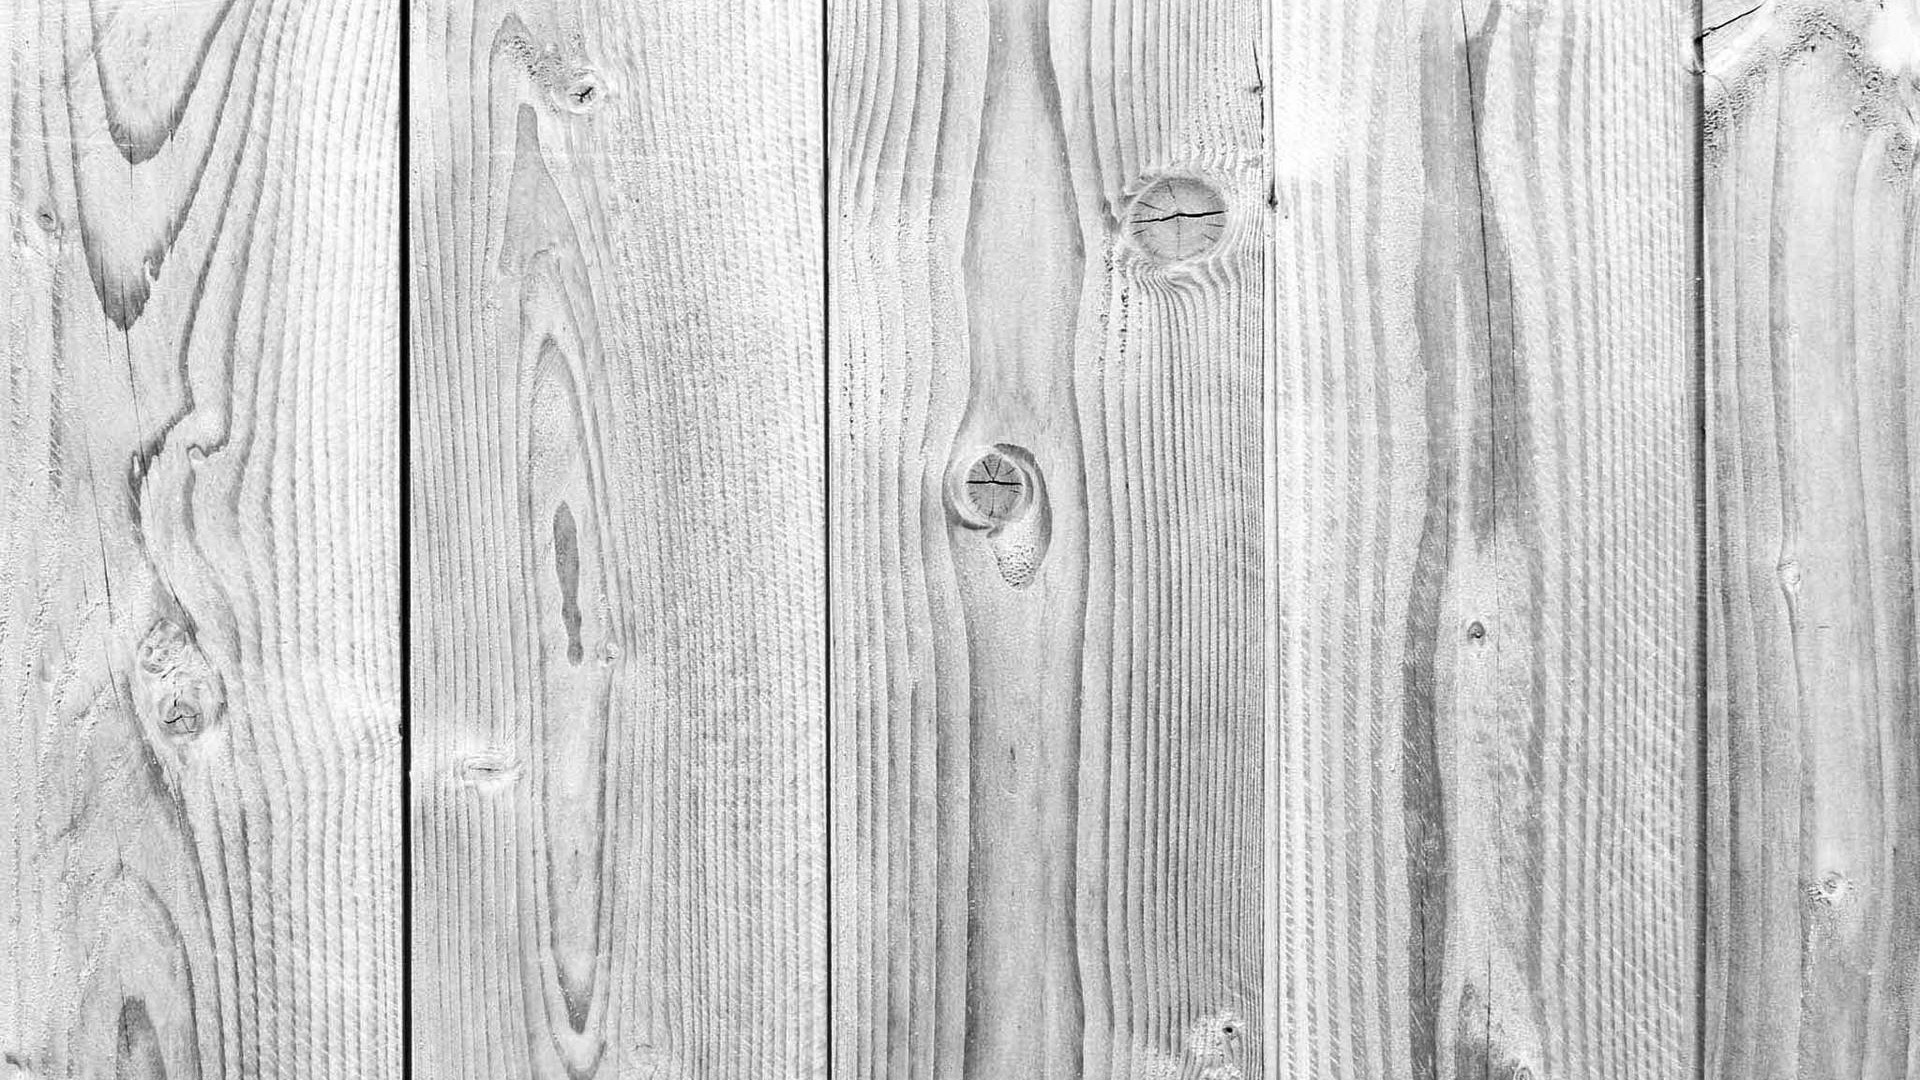 HD Wood Grain Wallpaper